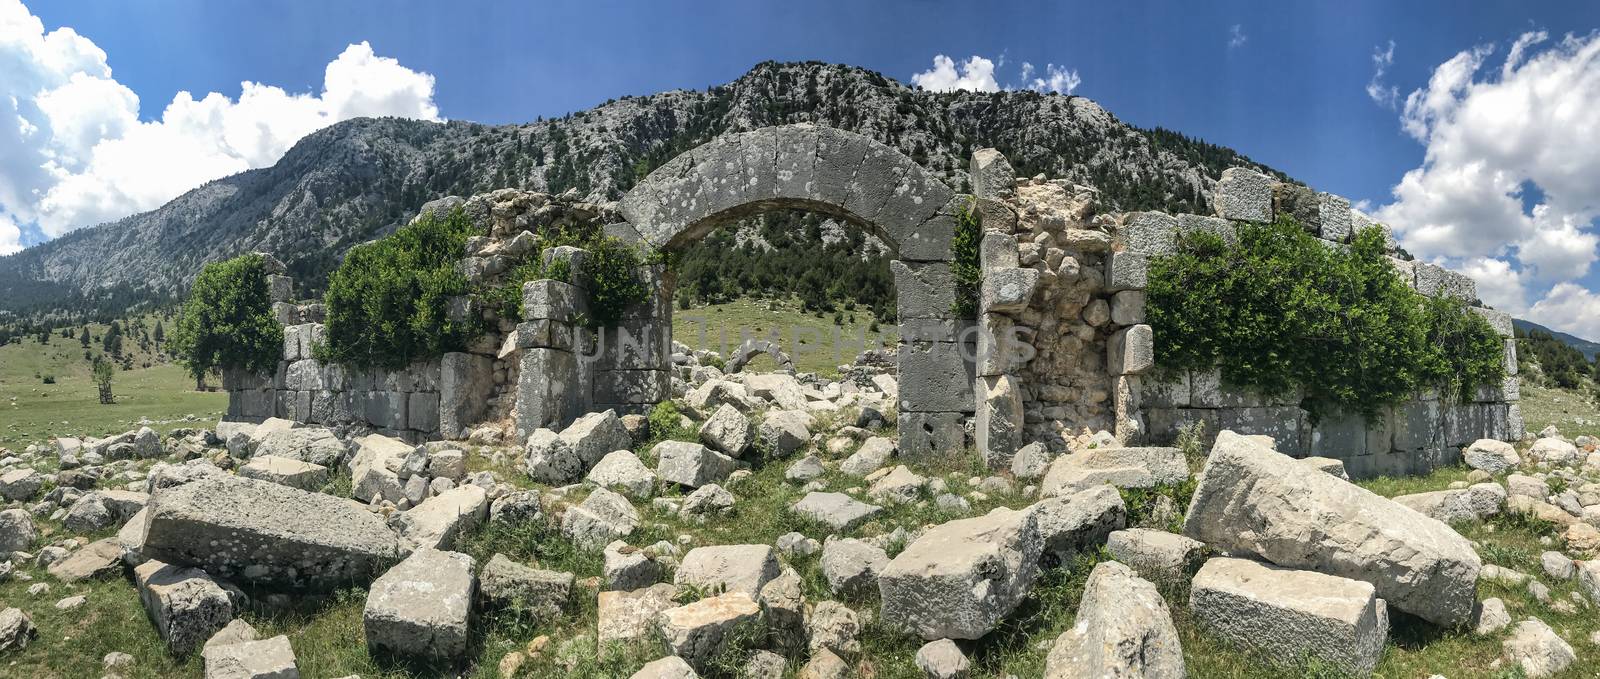 Tolhan;old Seljuk caravanserai structures